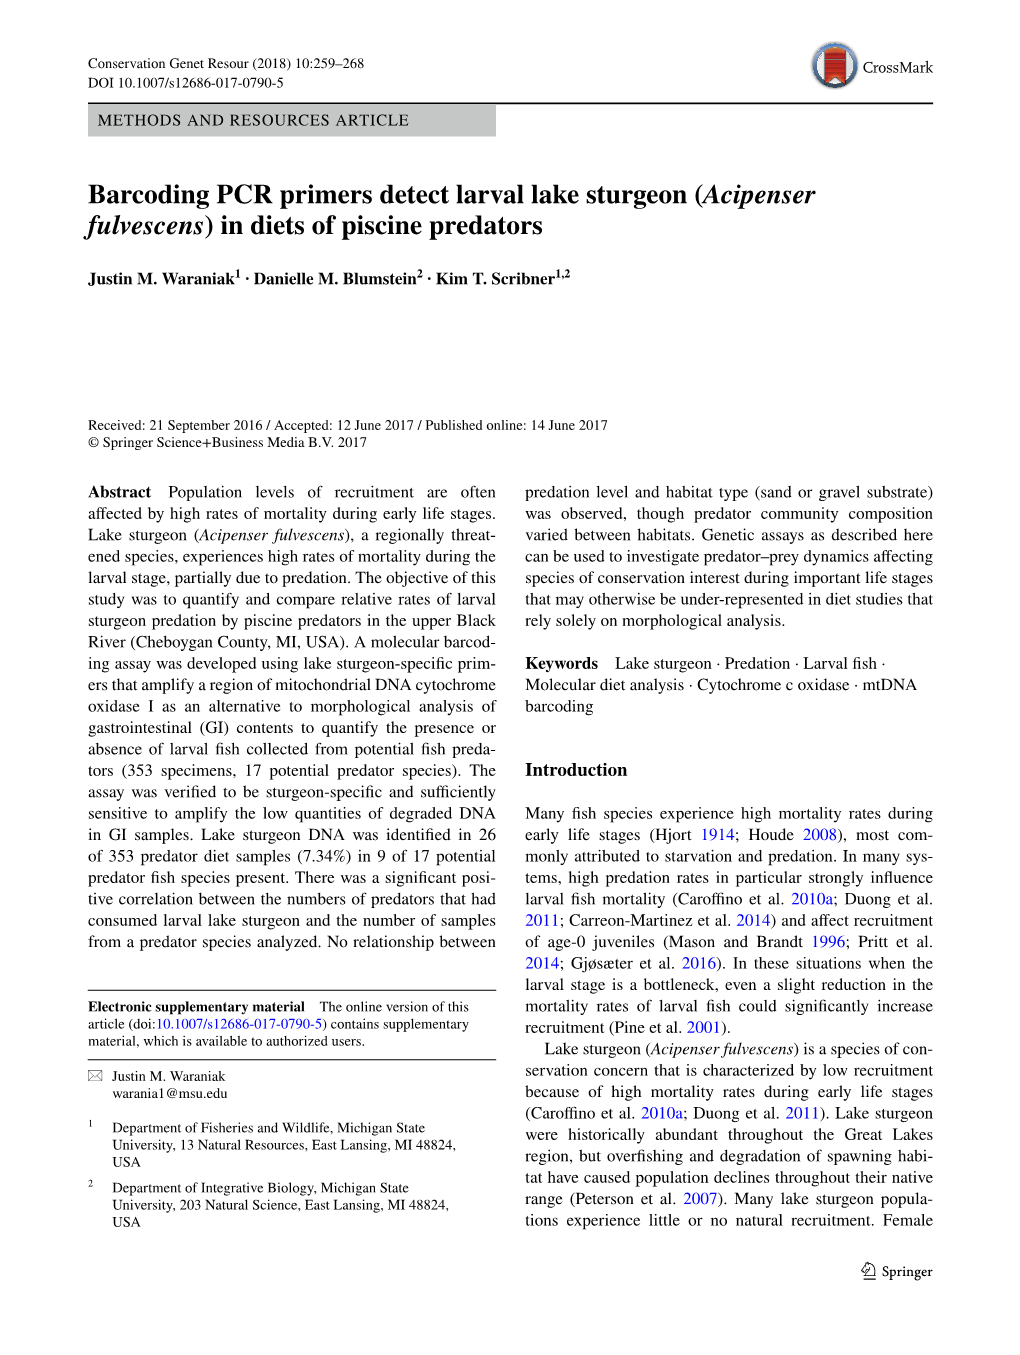 Barcoding PCR Primers Detect Larval Lake Sturgeon (Acipenser Fulvescens) in Diets of Piscine Predators